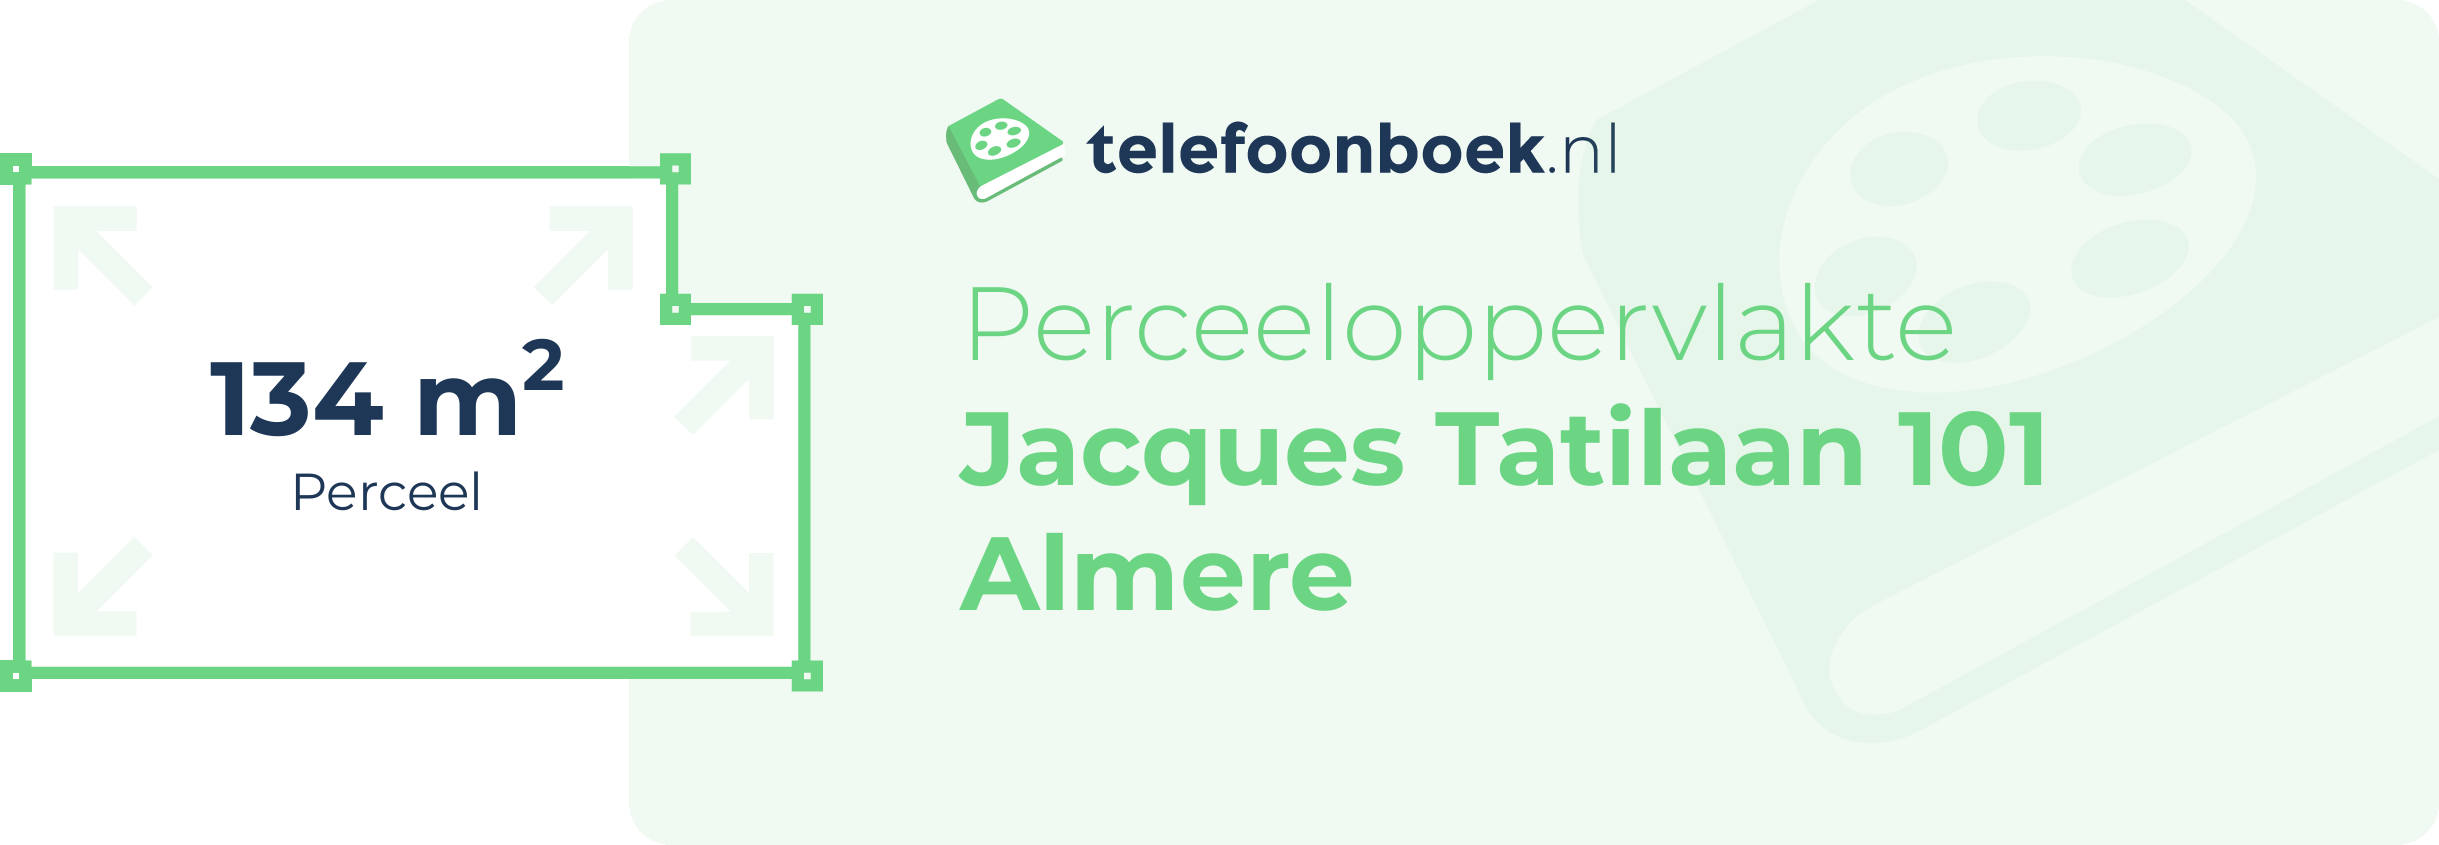 Perceeloppervlakte Jacques Tatilaan 101 Almere